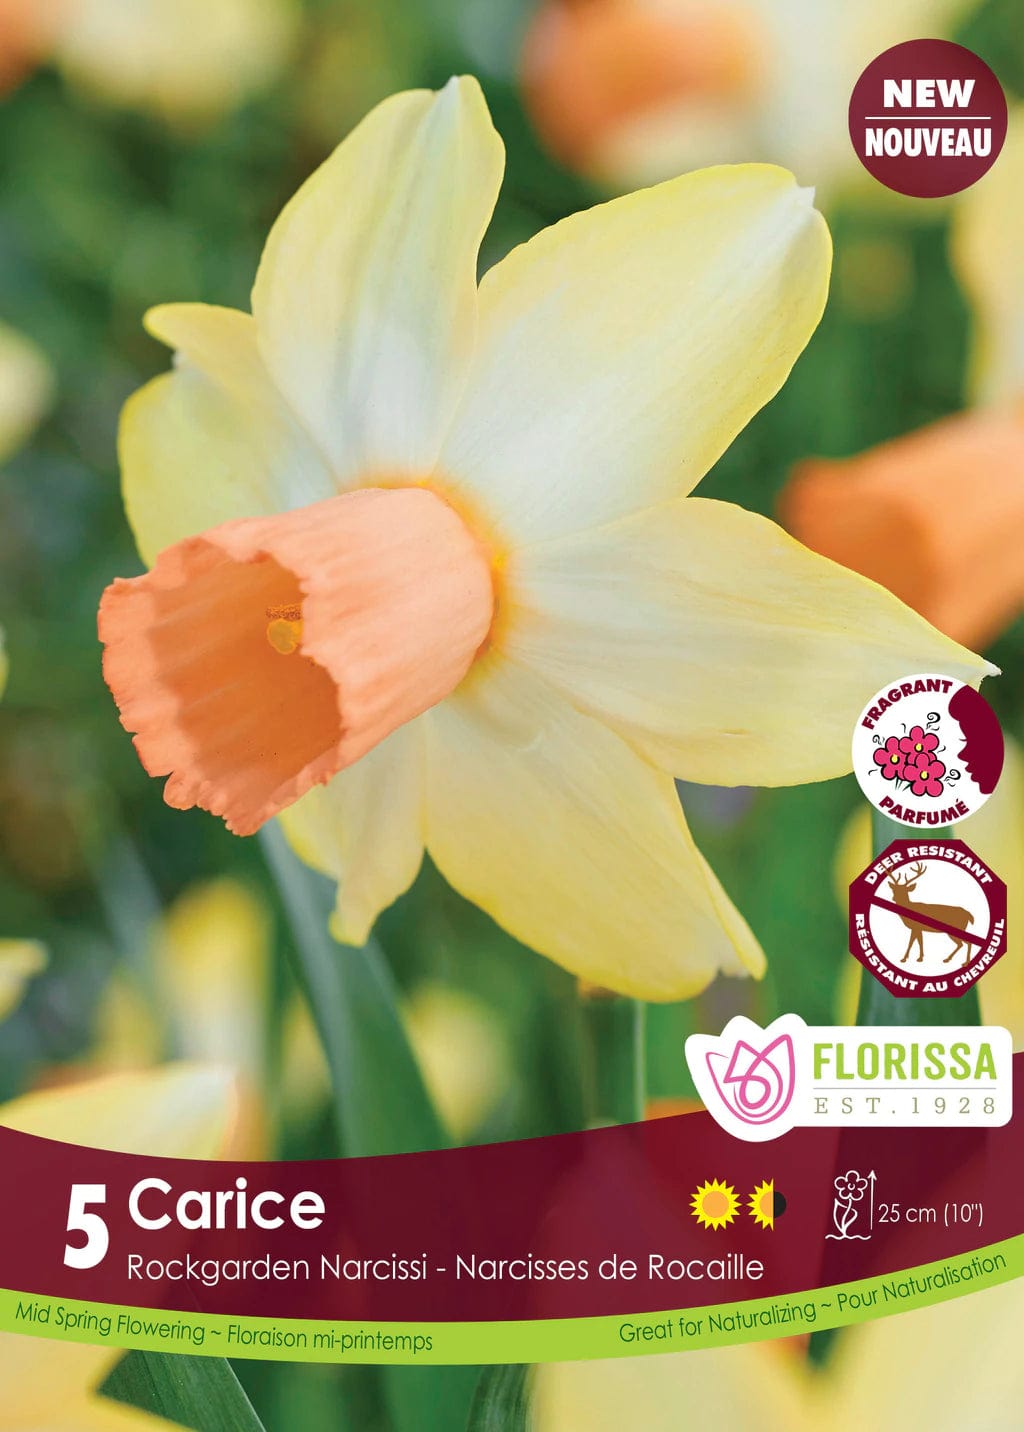 Narcissus - Carice, 5 Pack